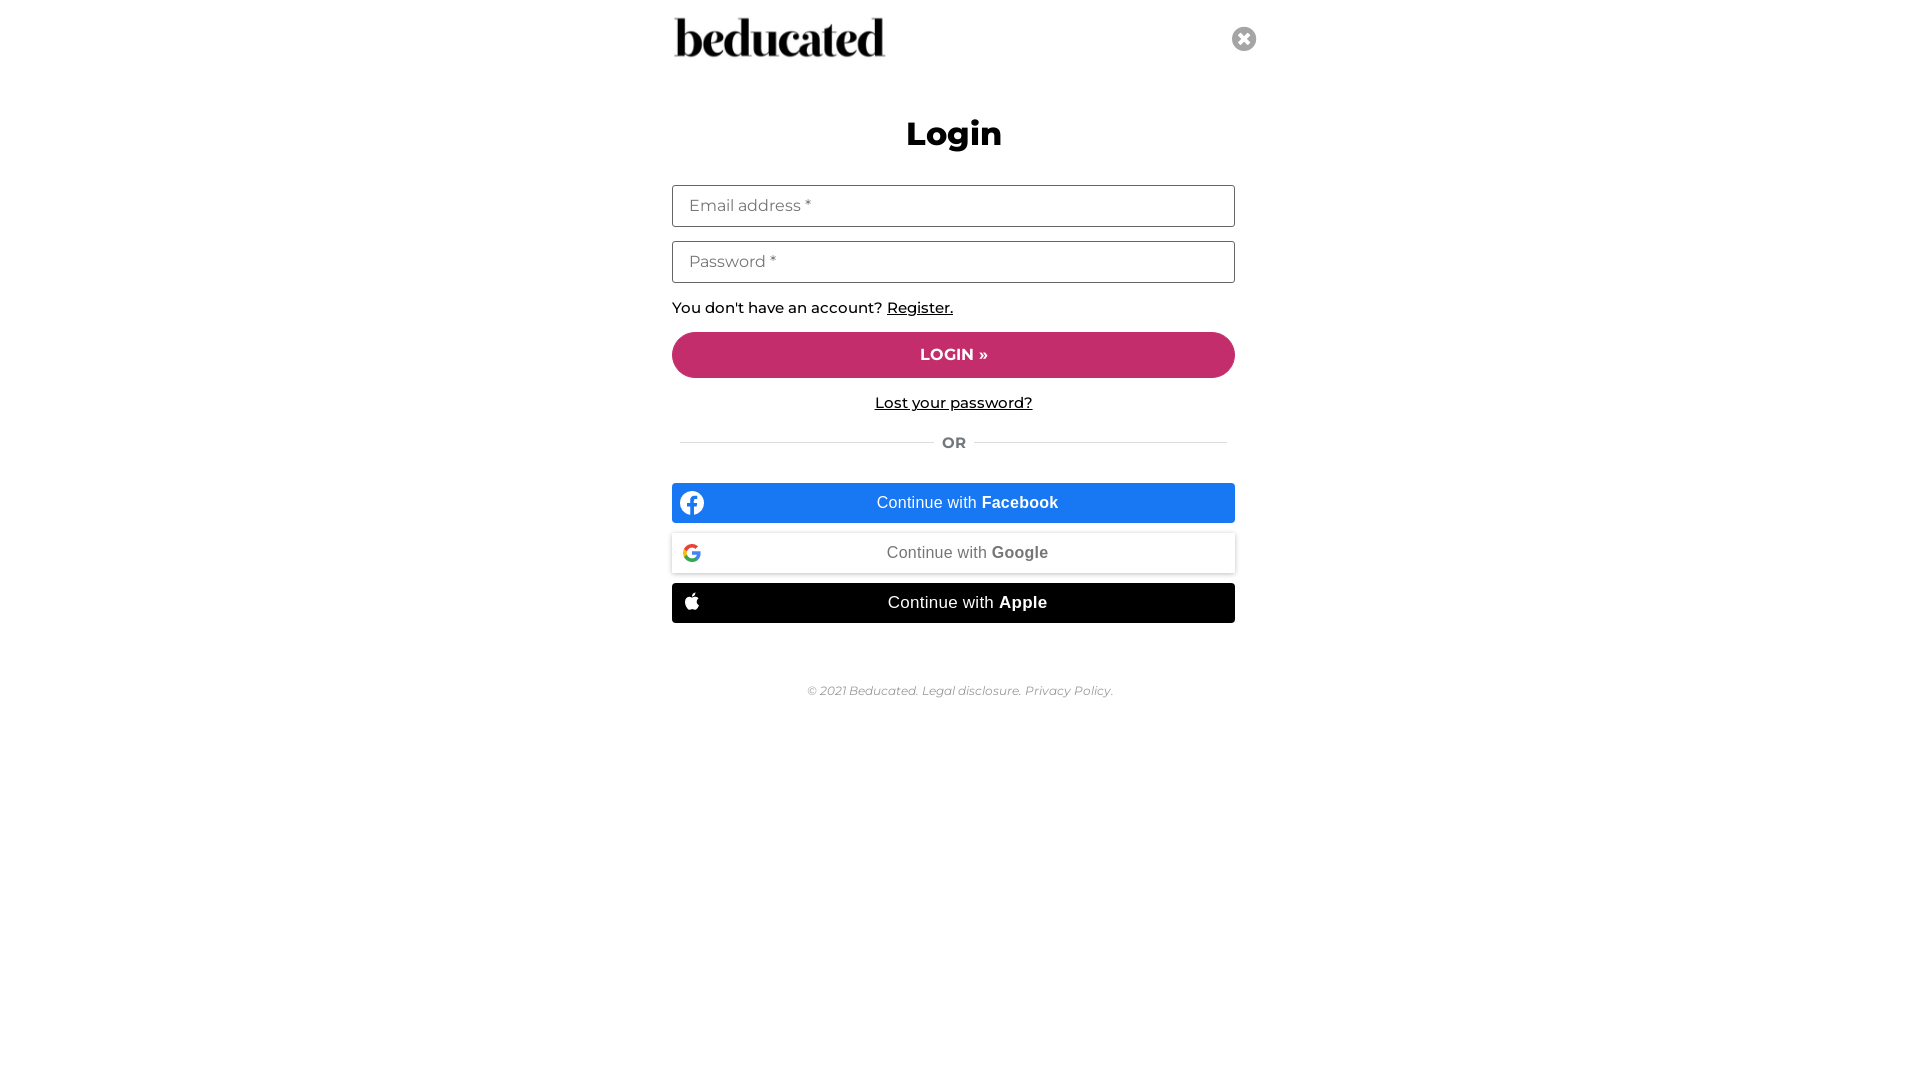 Website User Bewertung zu app.beducated.com